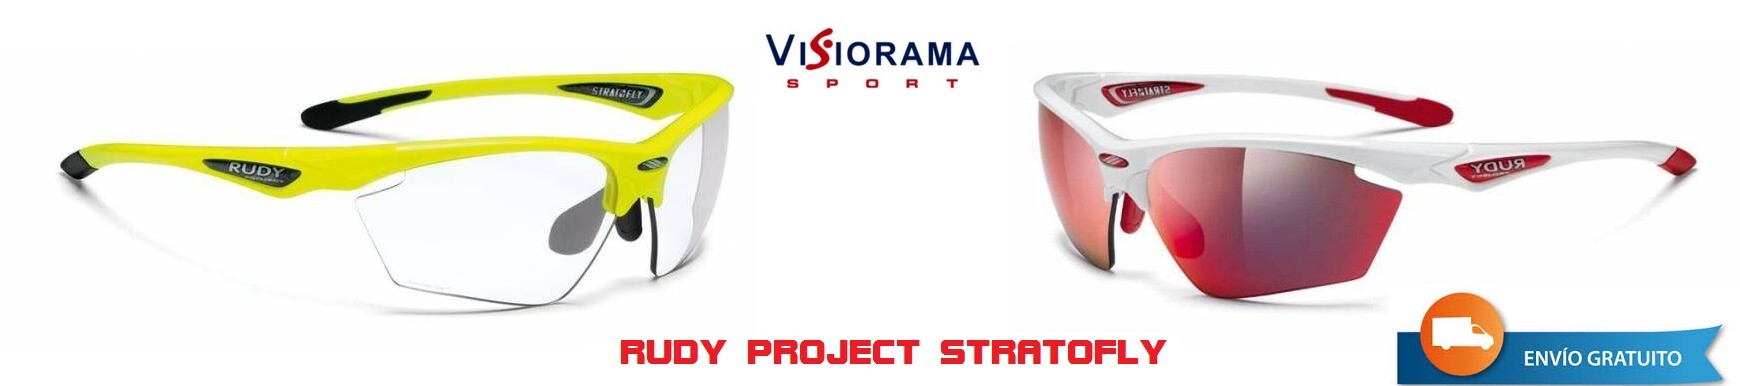 Promotion du projet Rudy chez VisioramaSport